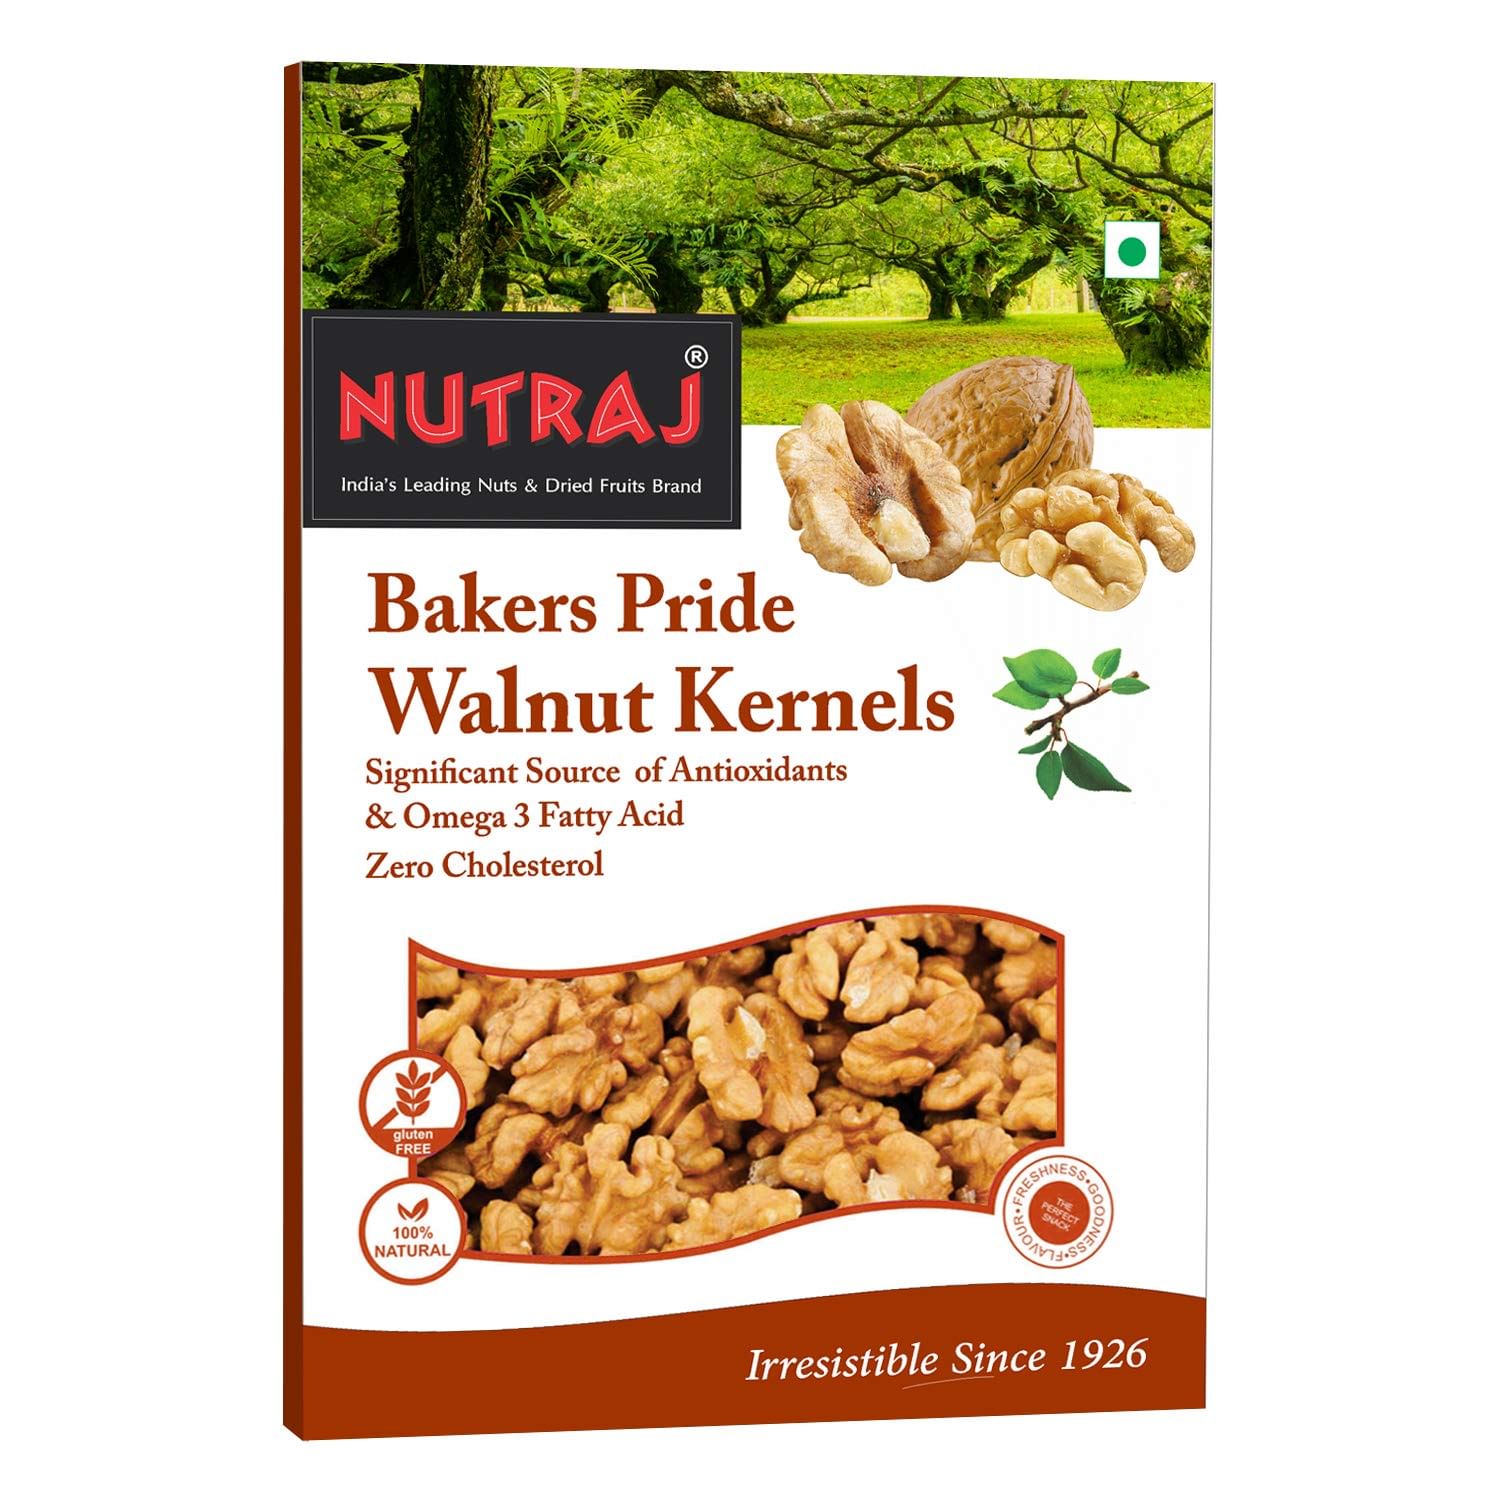 Nutraj Bakers Pride Walnut Kernels 250g